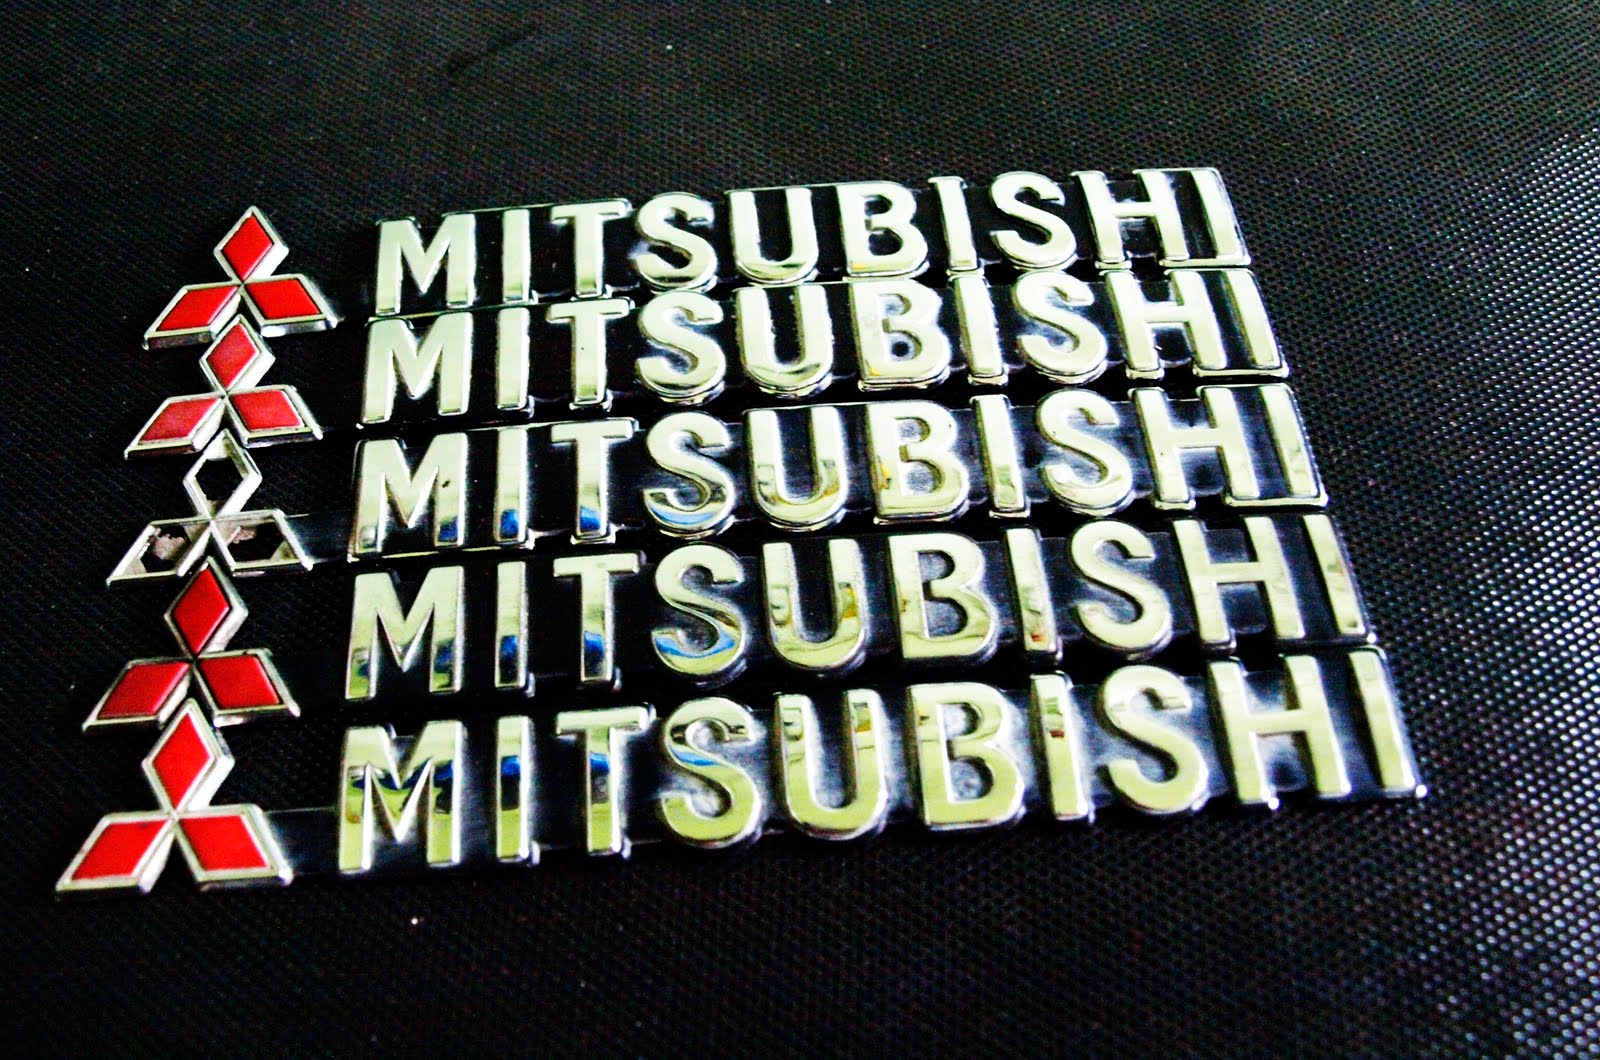 Used Mitsubishi Car Emblem. Original Mitsubishi Chrome Finish emblem . -halfcut item. -only few piece left. -self collect -x26gt; negotiable:)